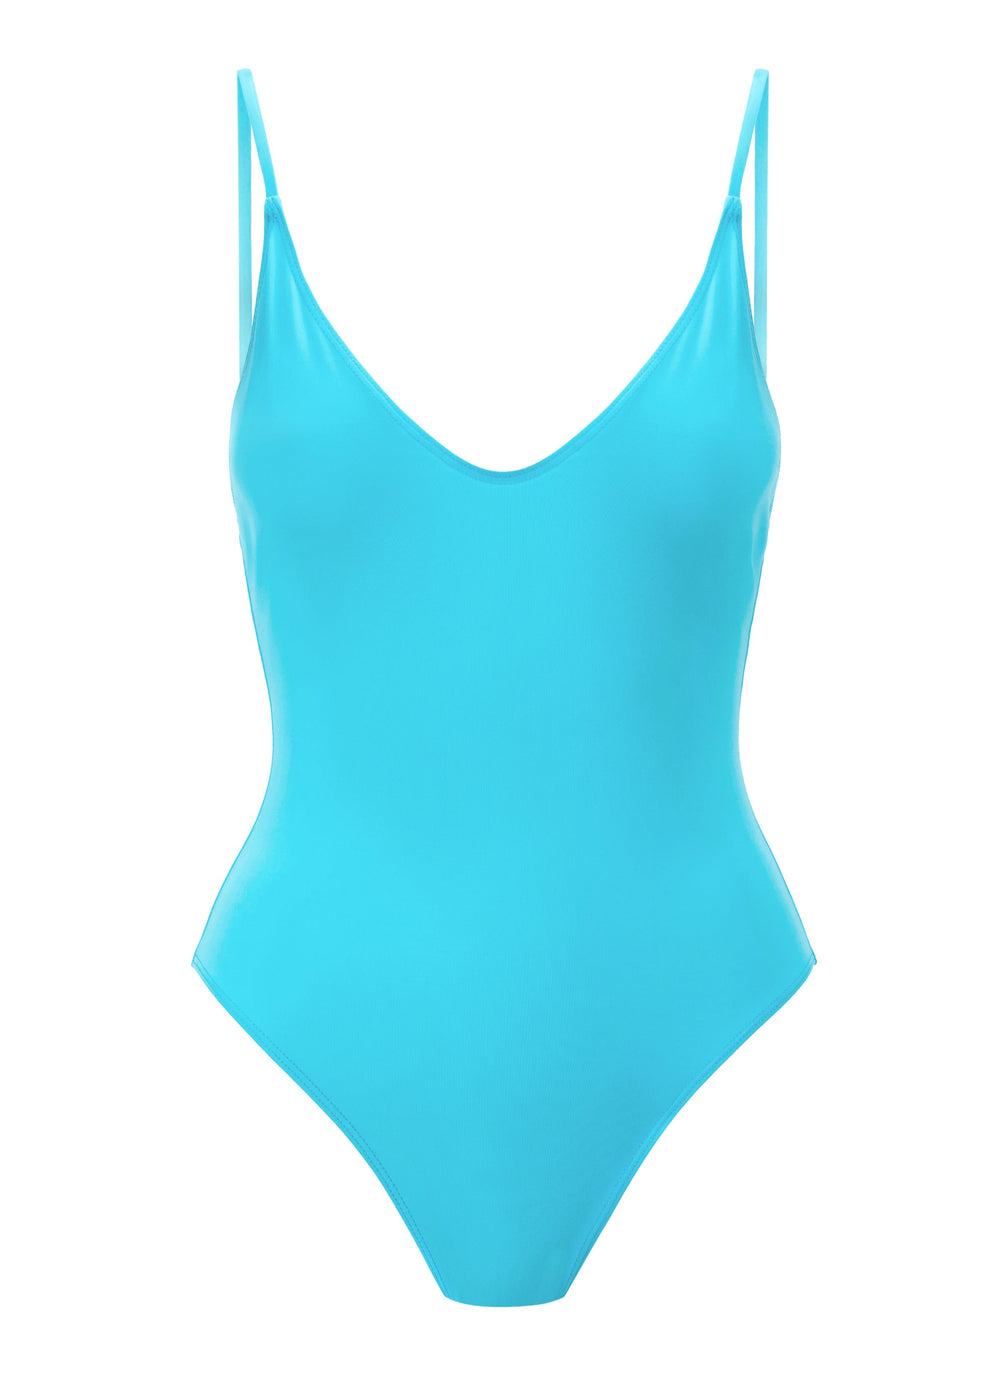 flatlay of aqua one piece swimsuit